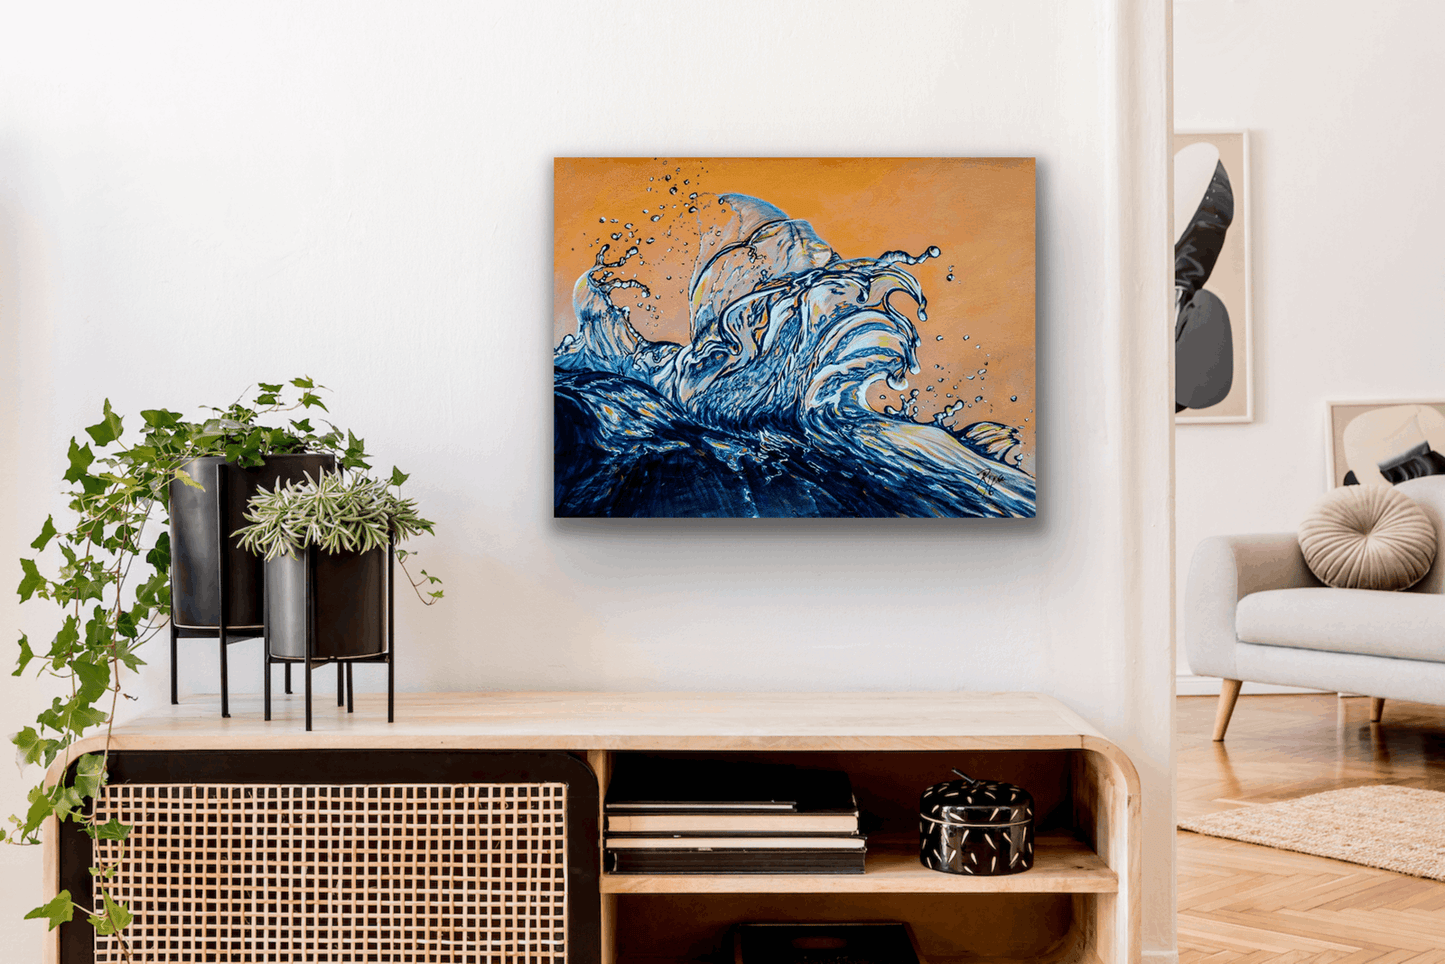 "Original painting a blue glass wave reaching into an orange sunset sky.